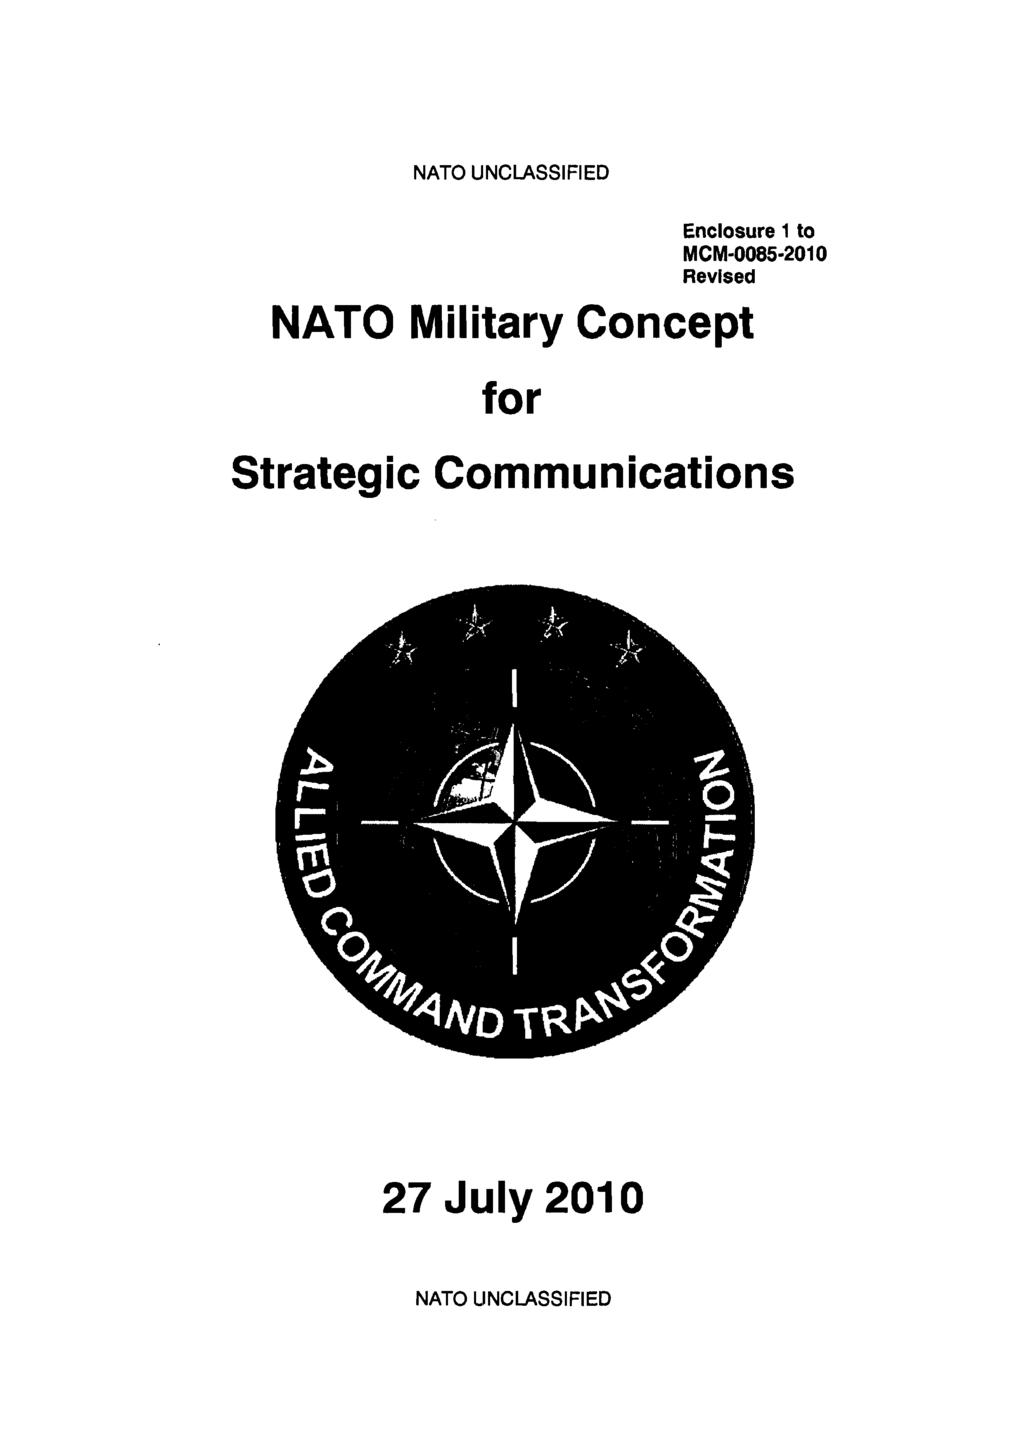 Enclosure 1 to MCM-0085-2010 Revised NATO